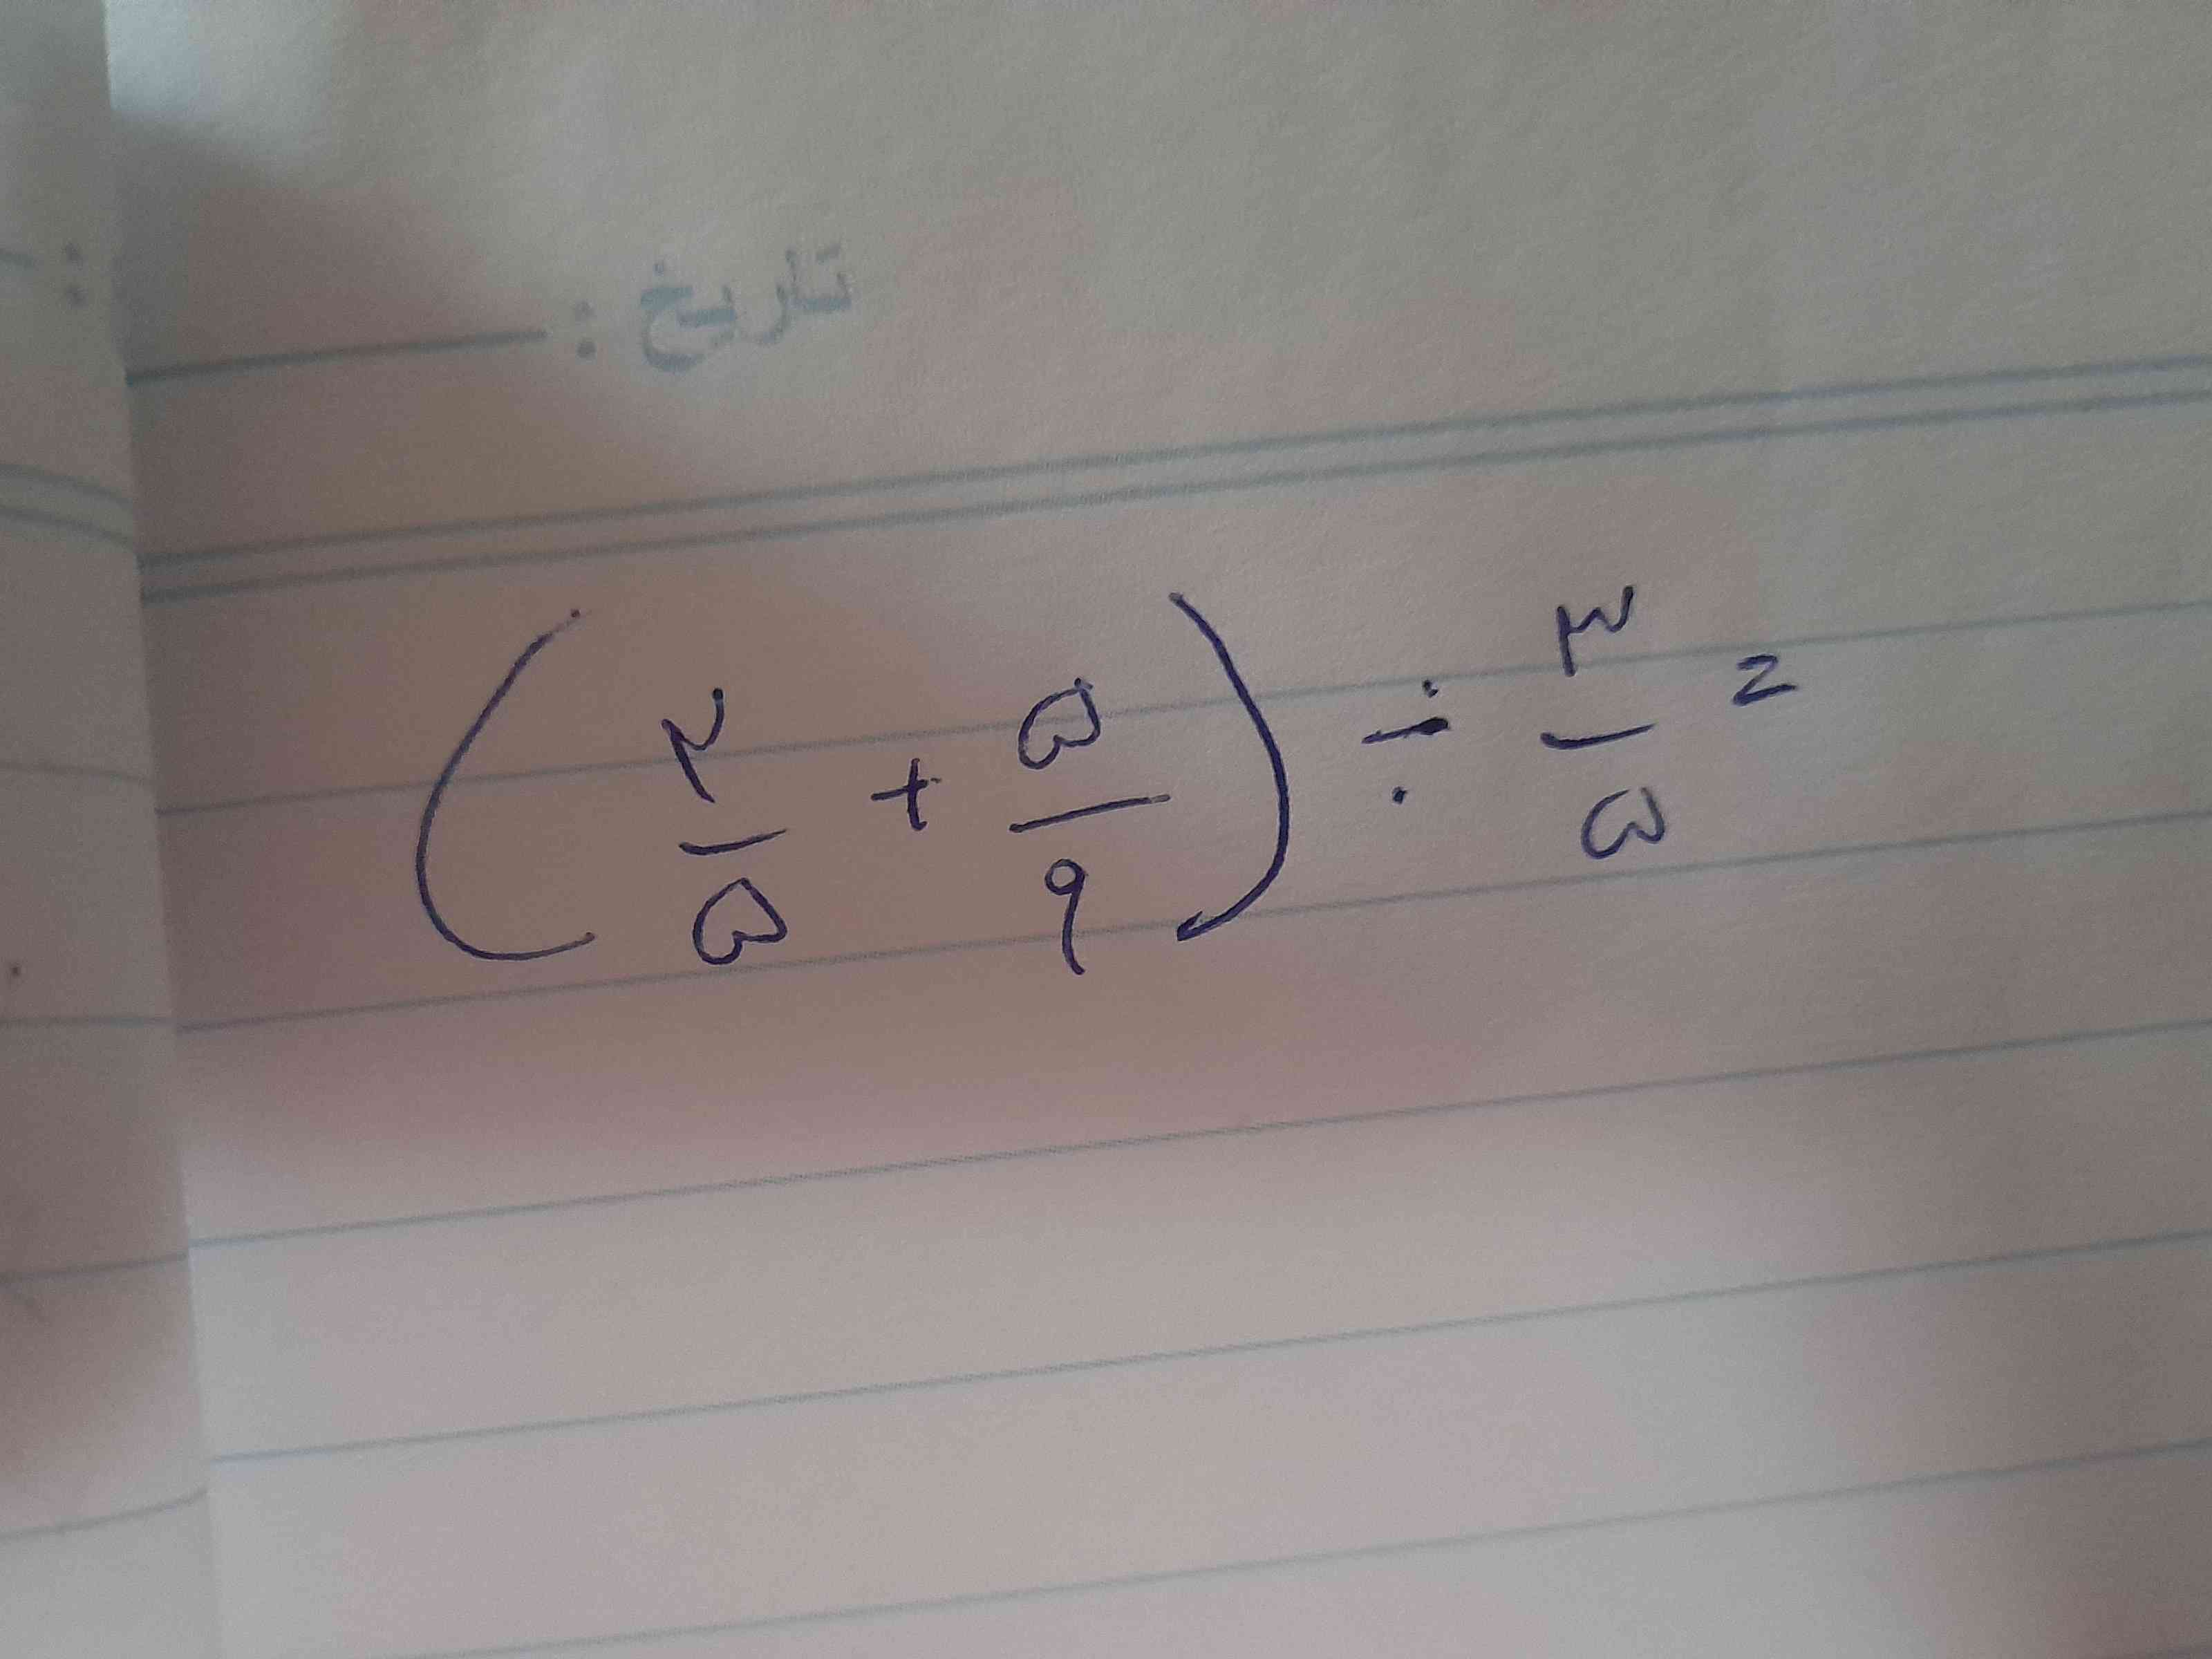 جواب این معادله چند میشه